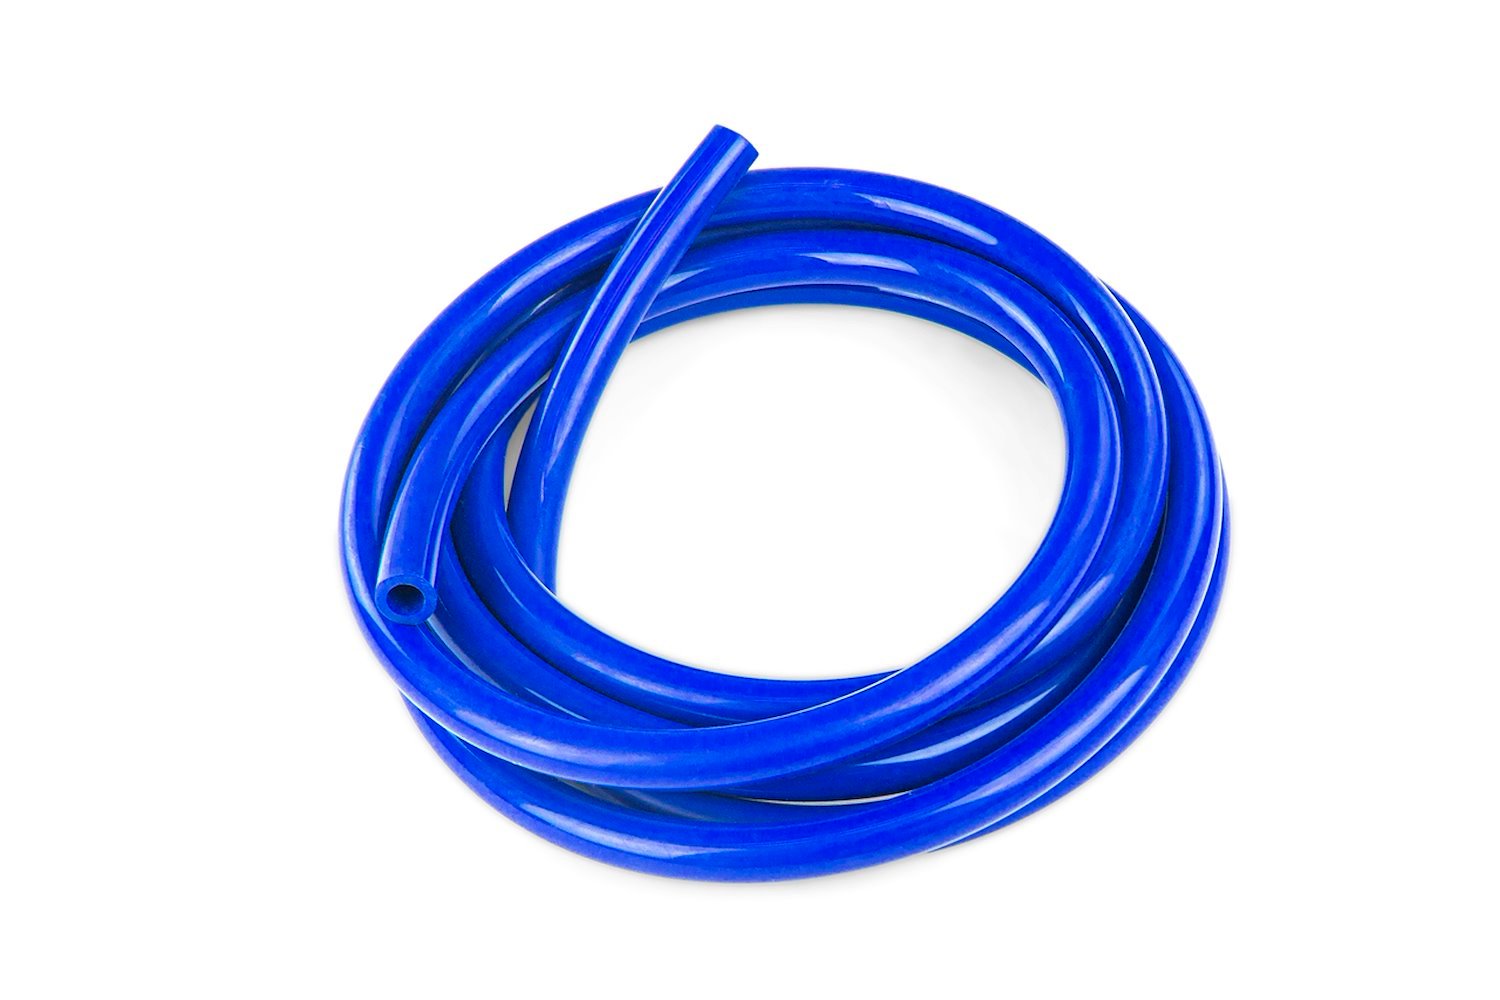 HTSVH35-BLUEx25 High-Temperature Silicone Vacuum Hose Tubing, 3.5 mm ID, 25 ft. Roll, Blue